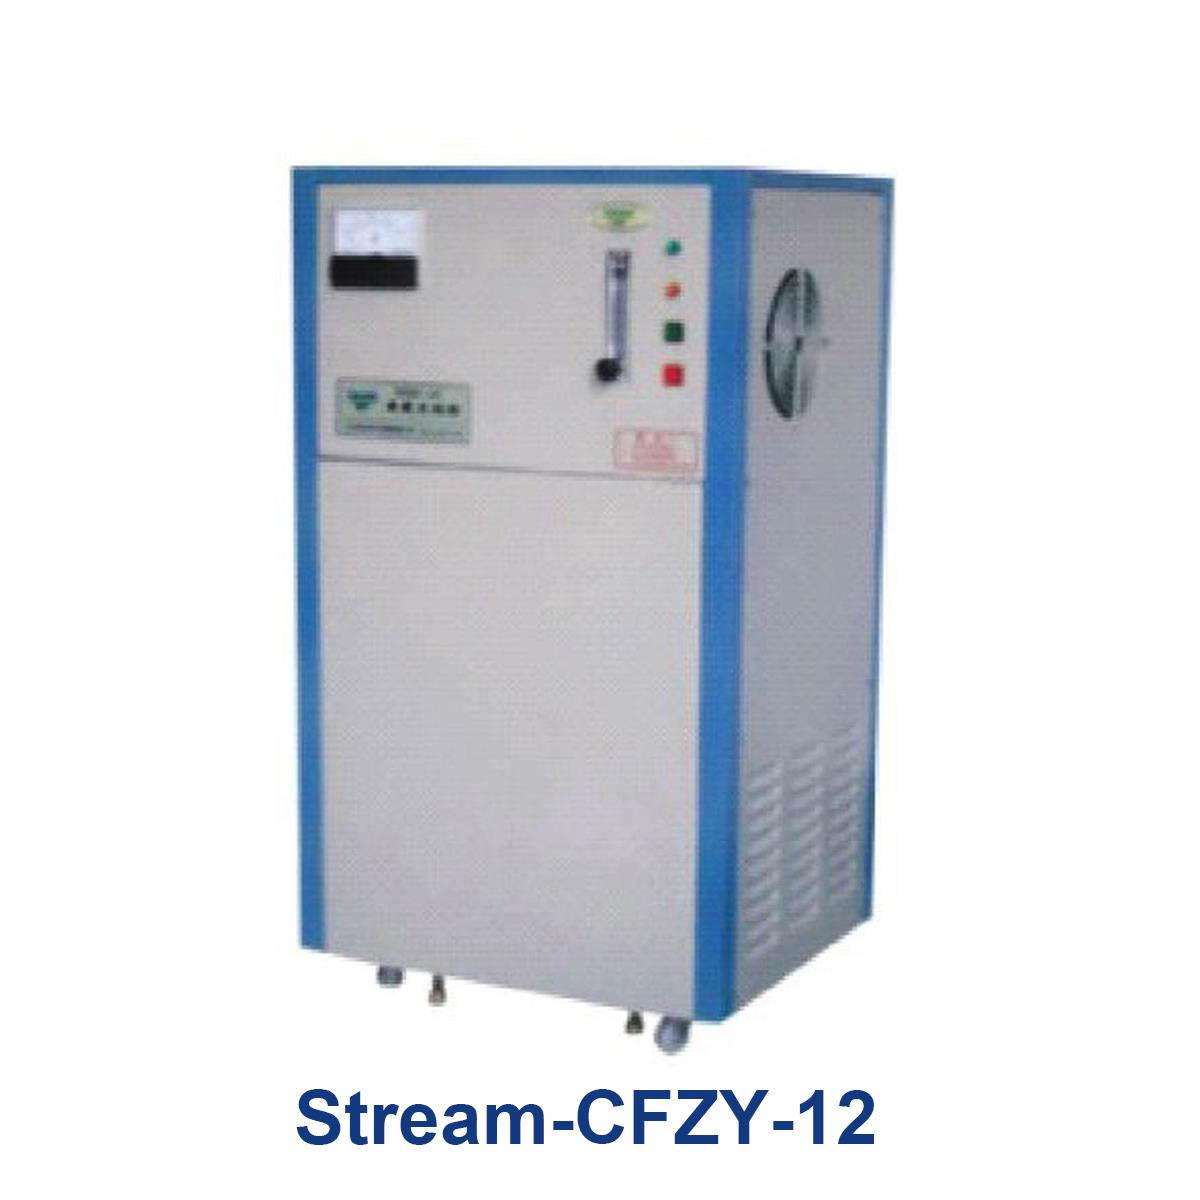 Stream-CFZY-12